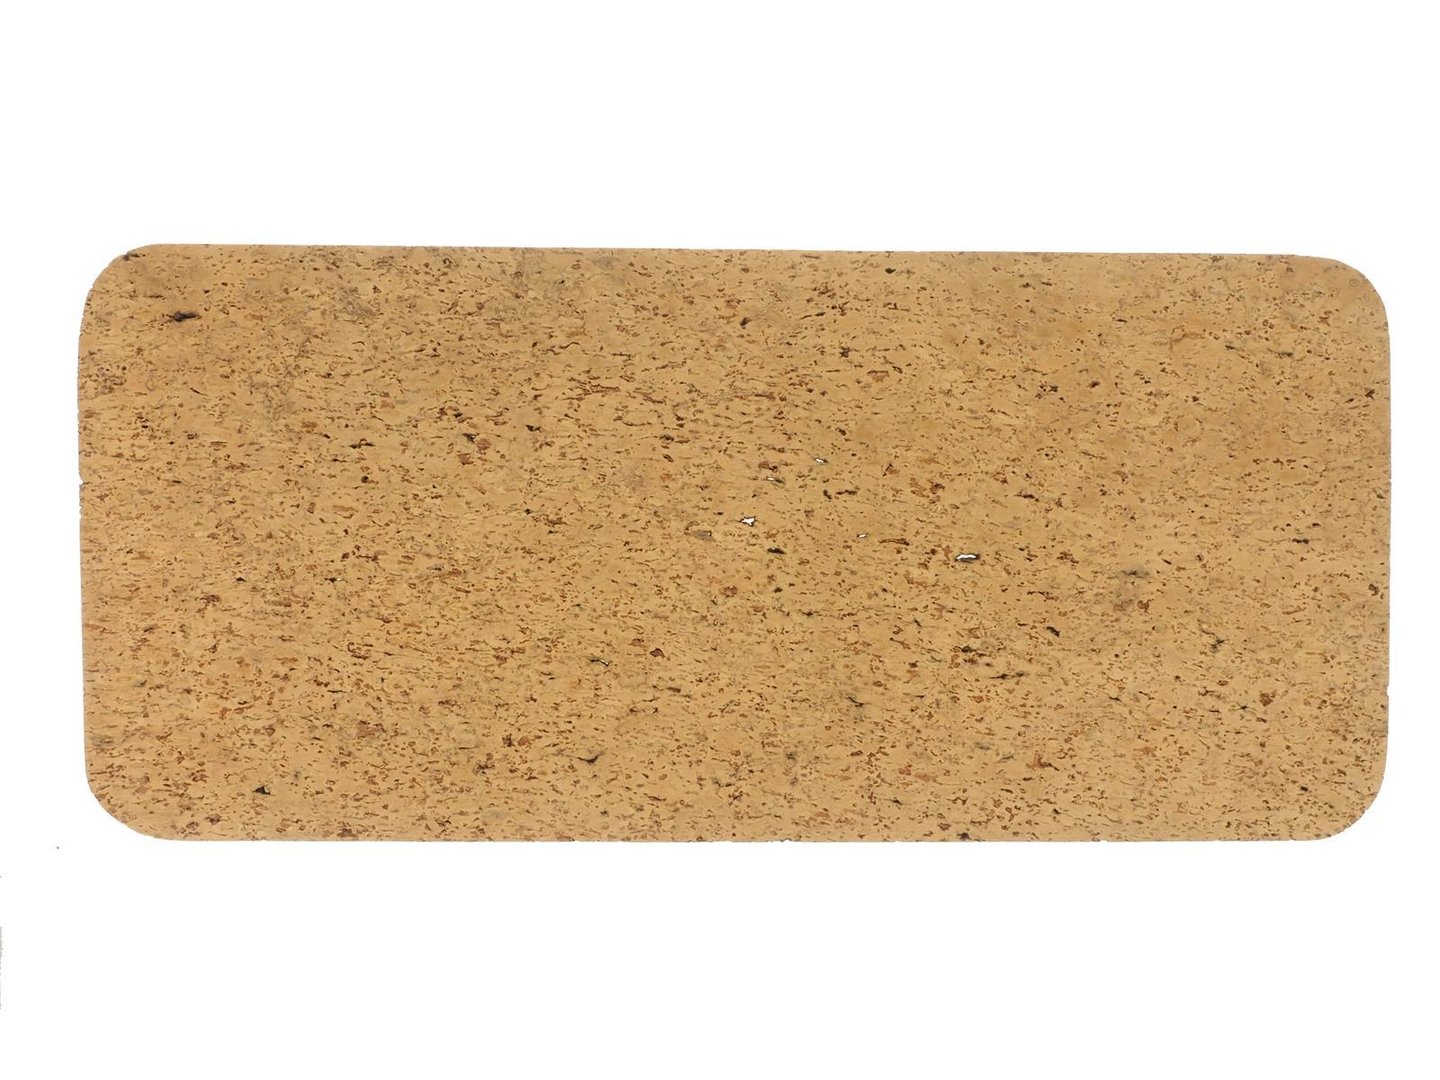 7730 14 9 Trivet Natural cork plate